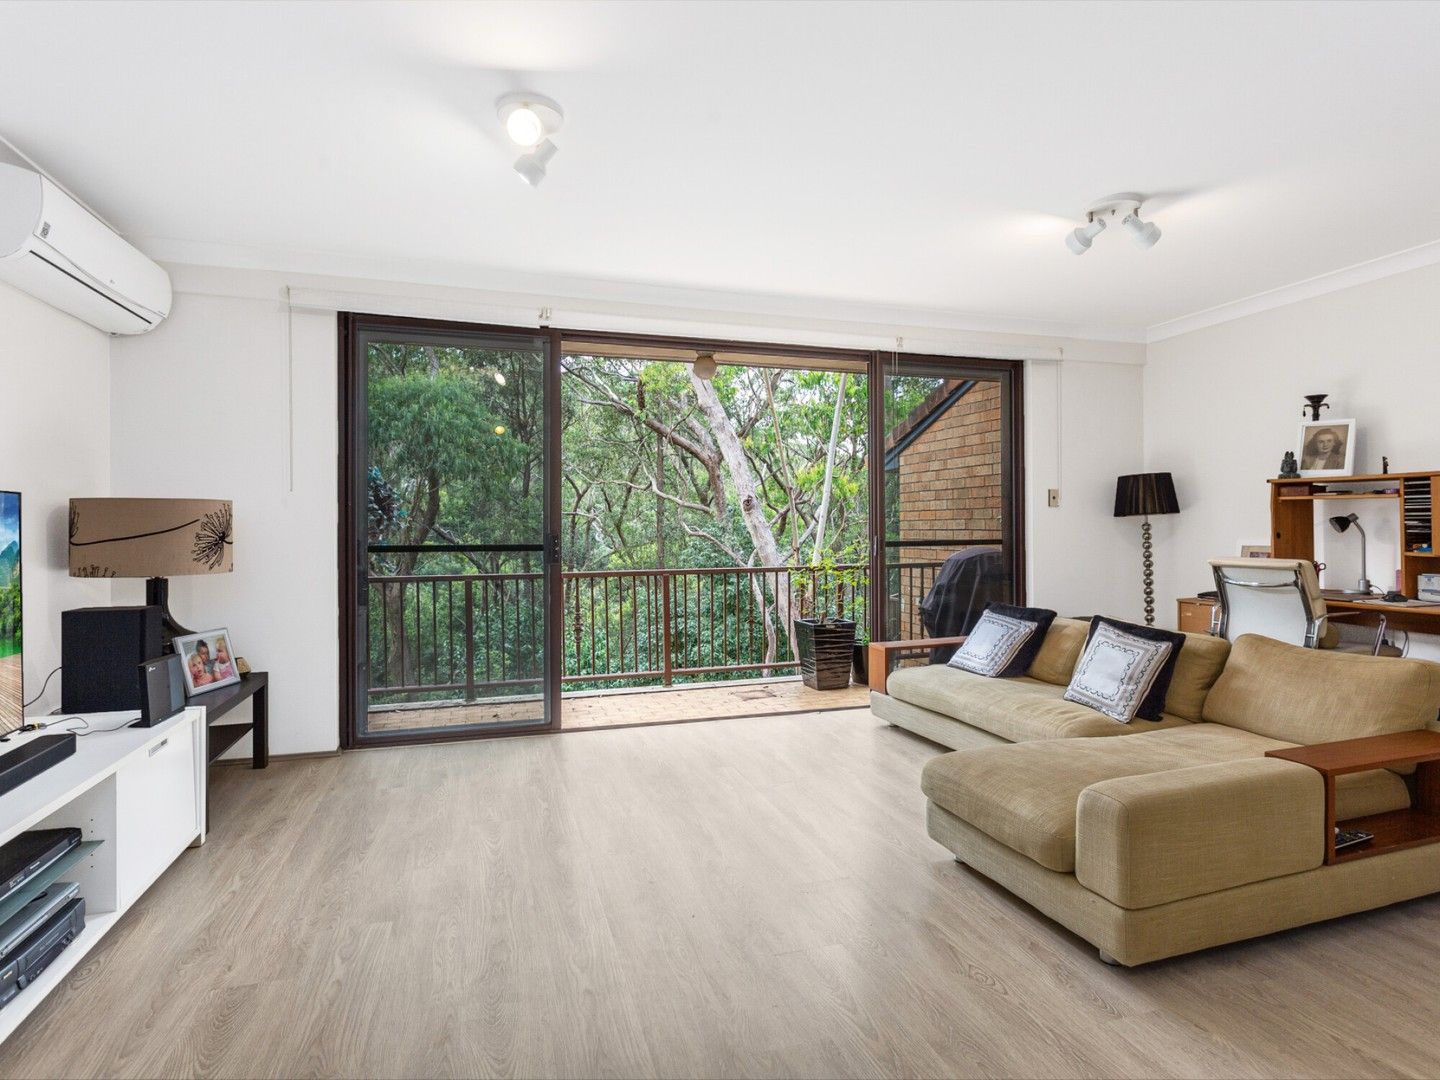 2 bedrooms Apartment / Unit / Flat in 84/106 Crimea Road MARSFIELD NSW, 2122